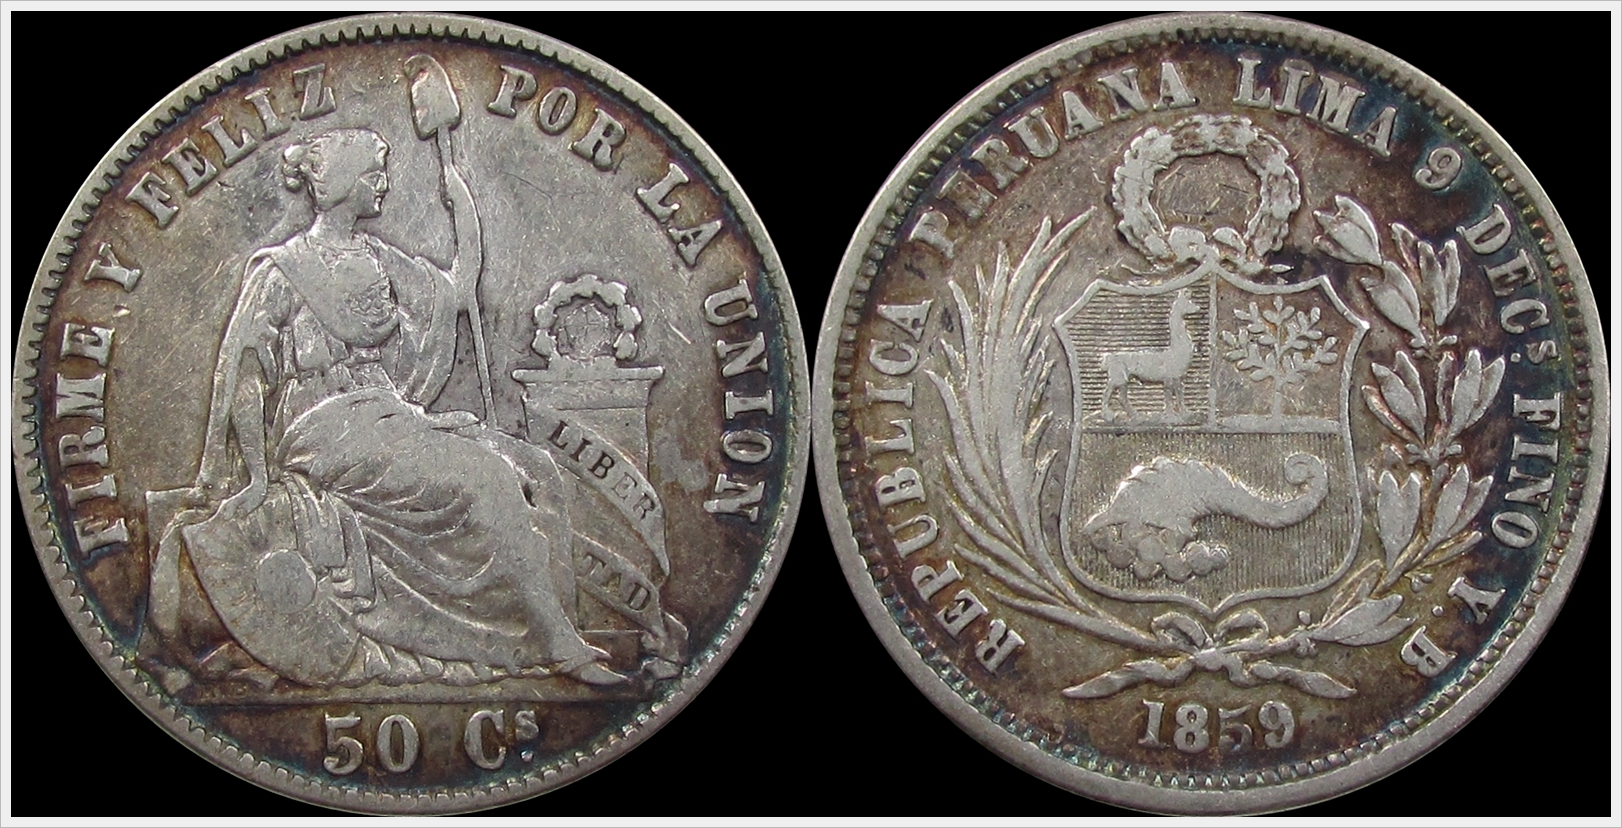 Peru 1859 50 Centavos.jpg